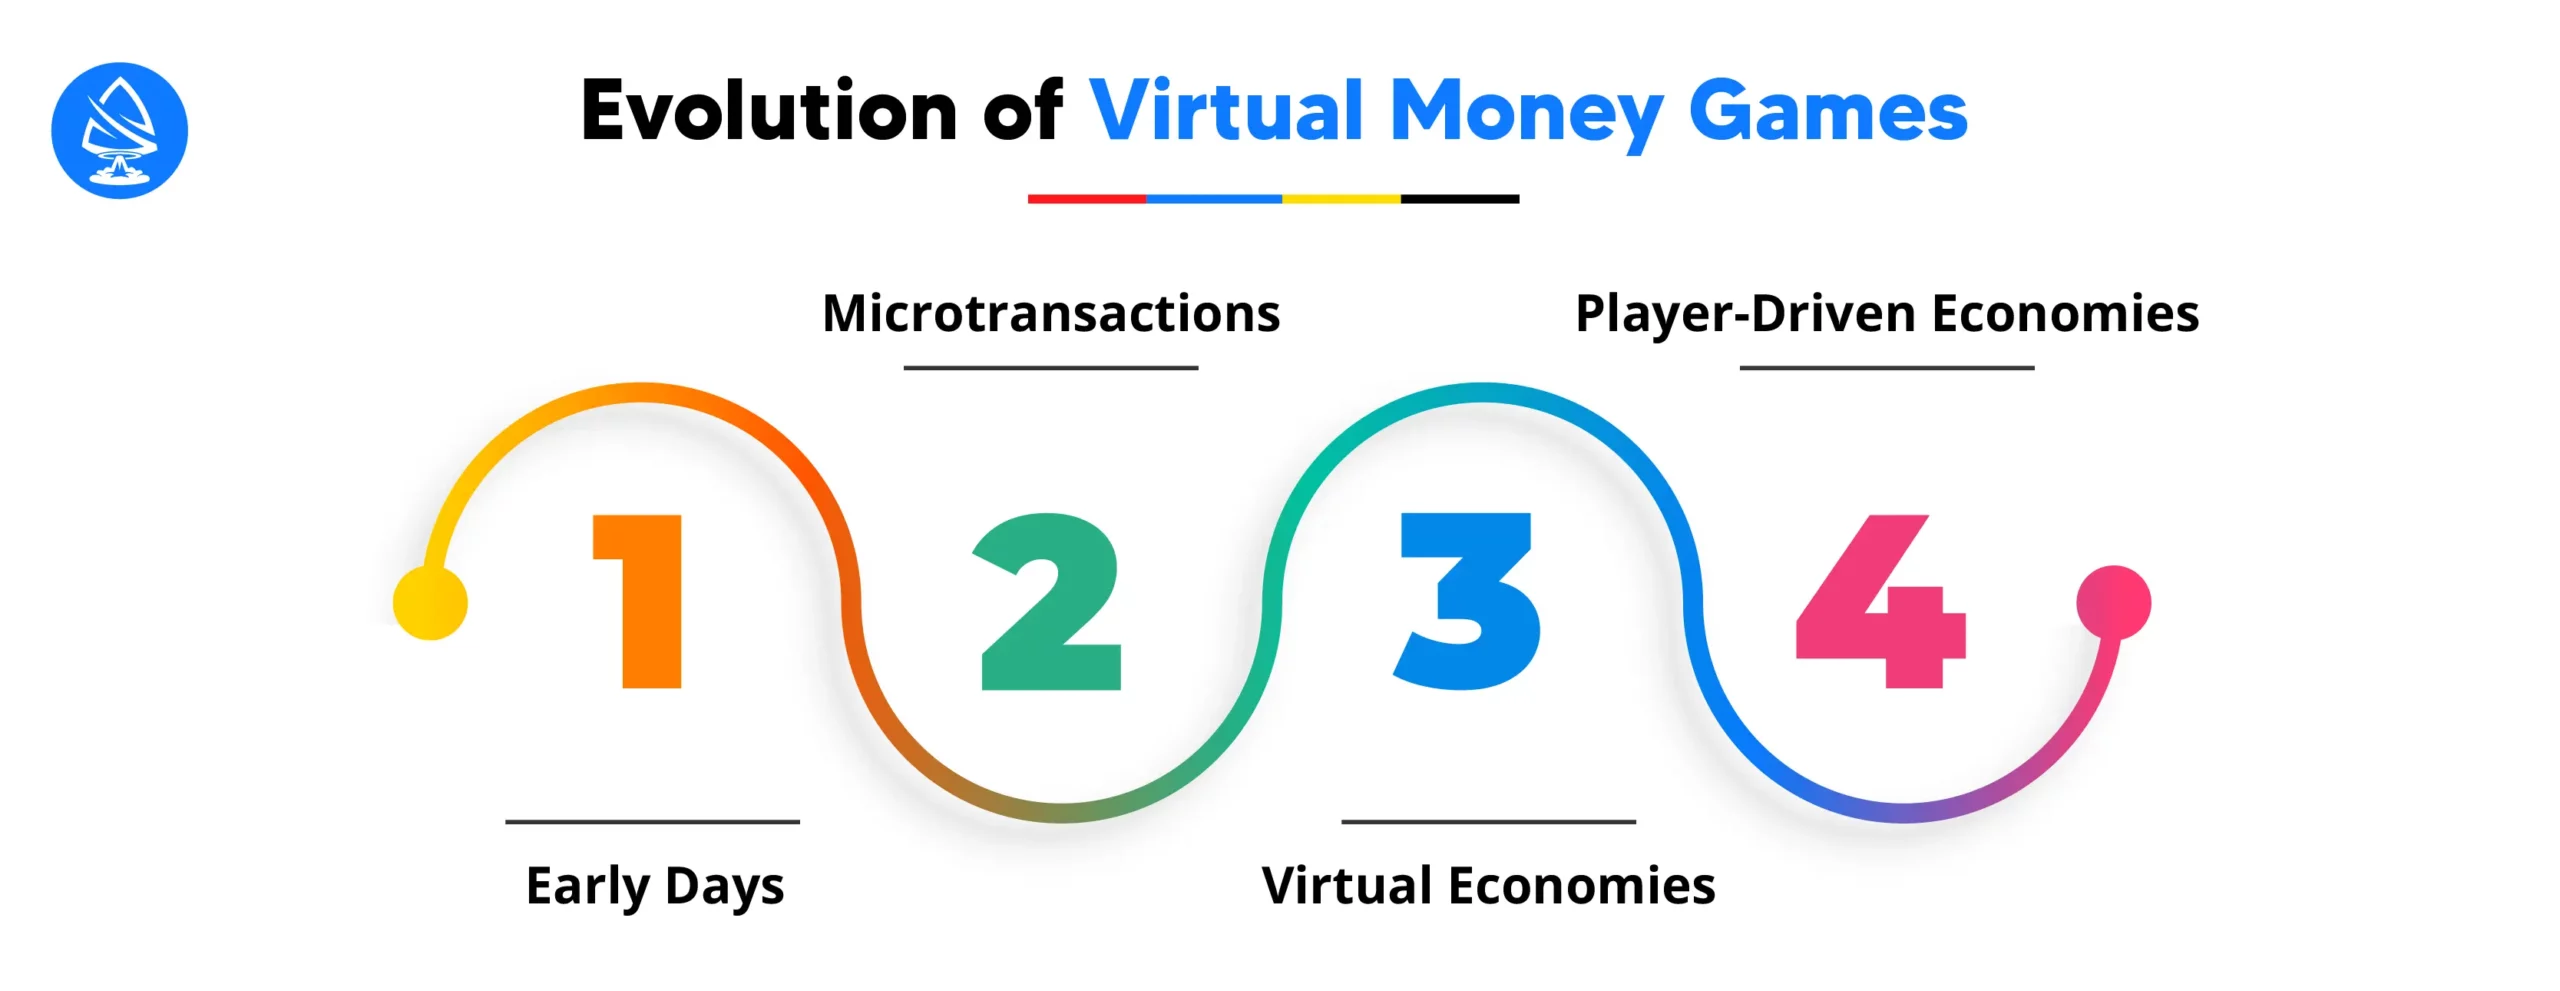 Evolution of Virtual Money Games